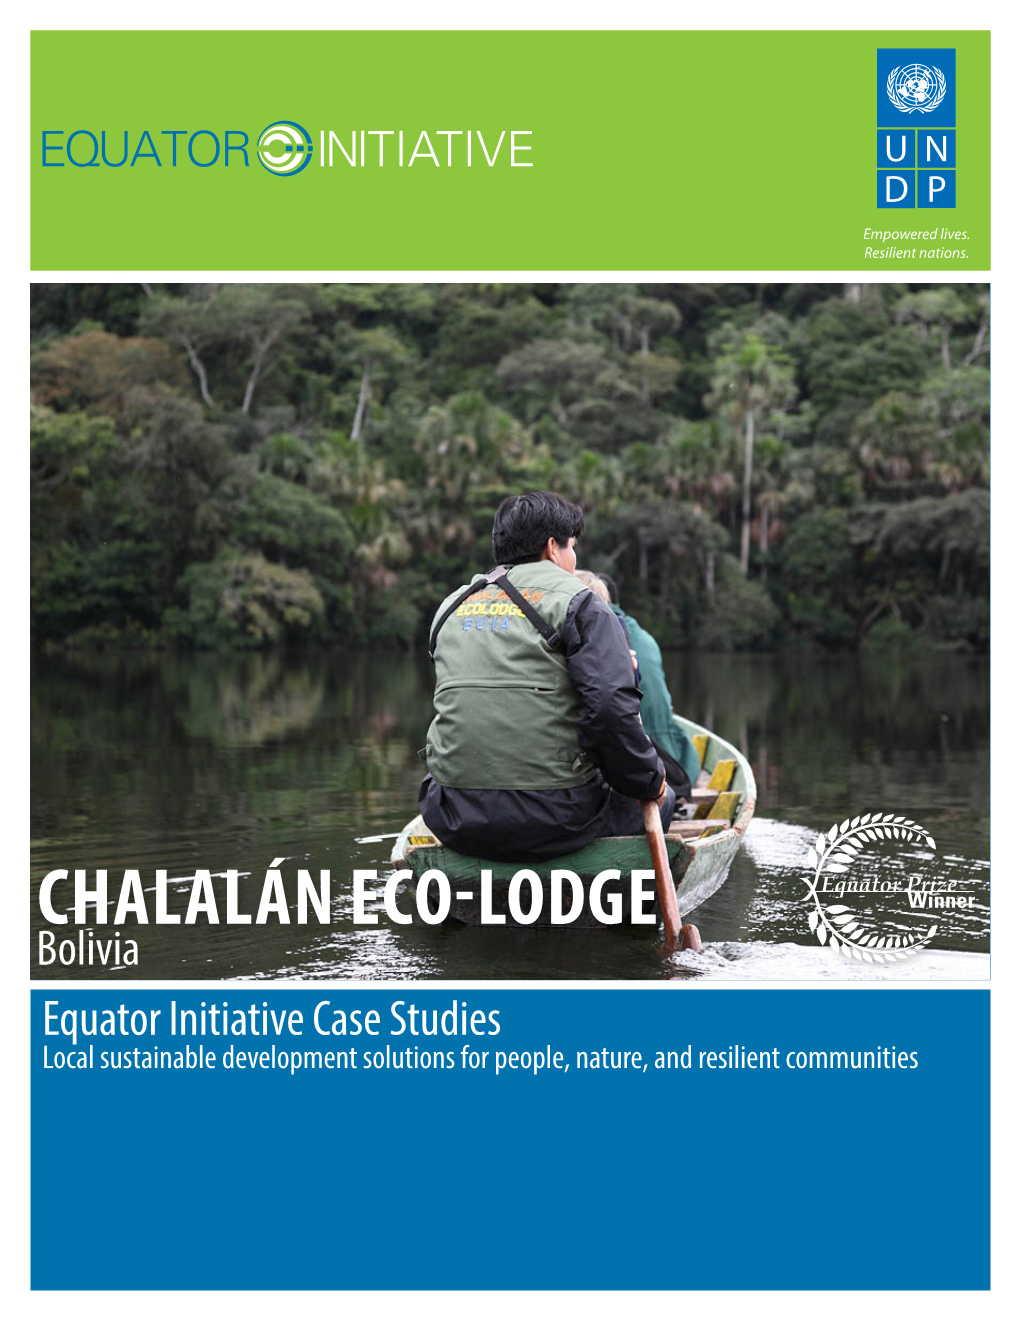 Chalalán Eco-Lodge